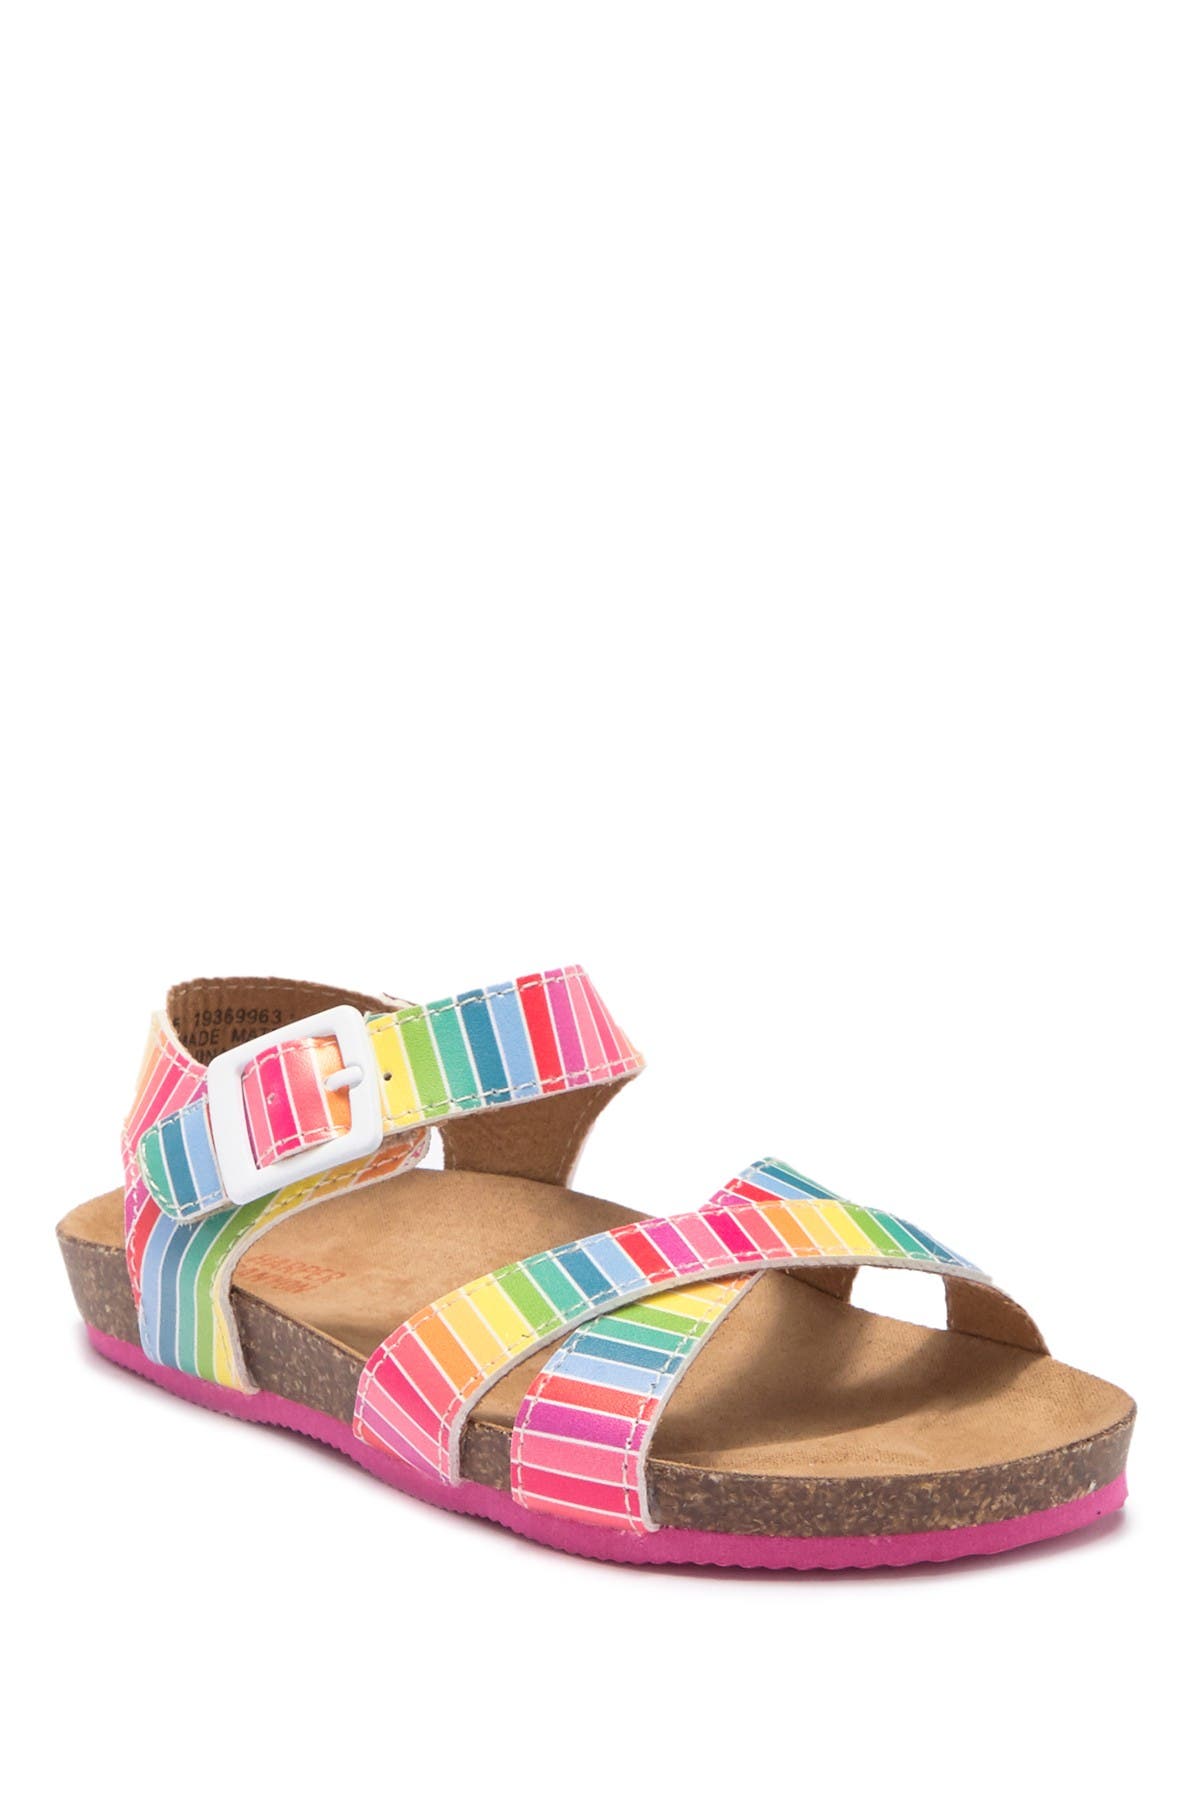 nordstrom rack rainbow sandals